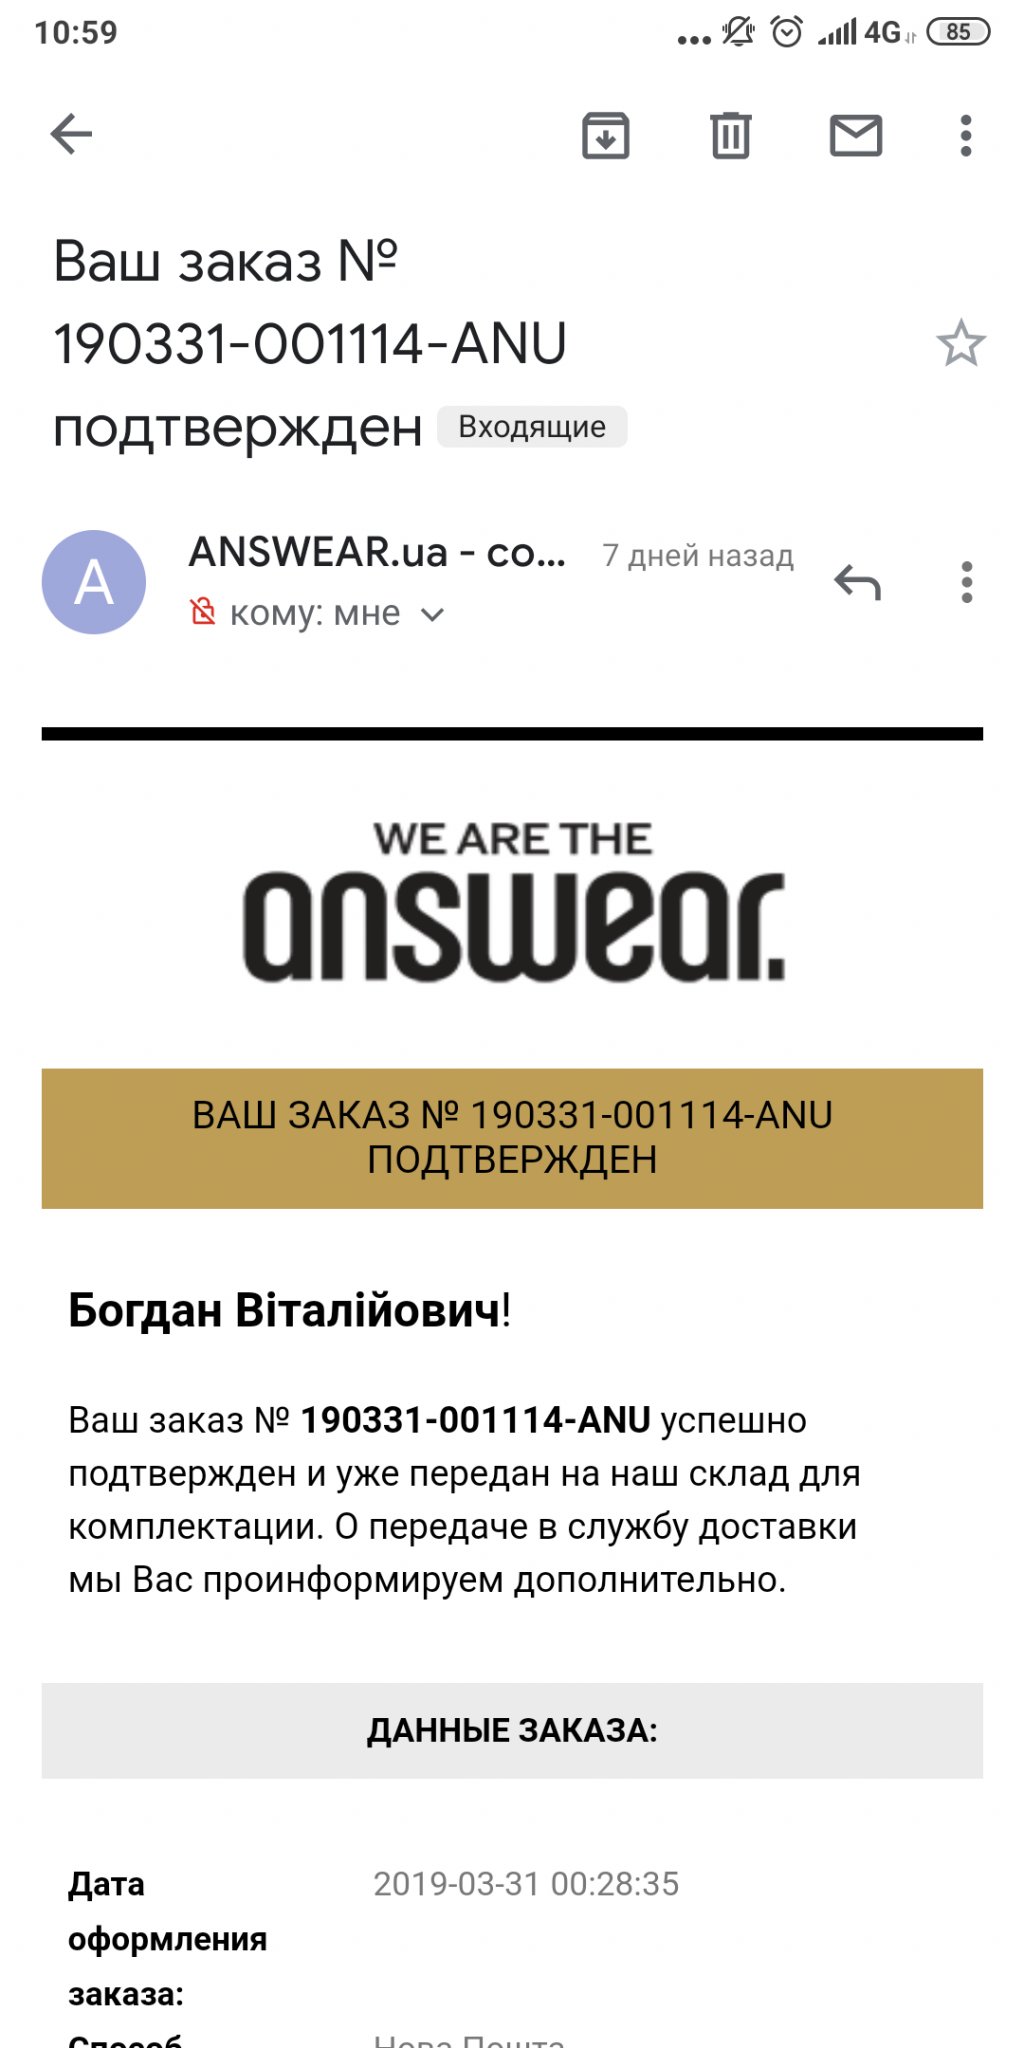 ANSWEAR.ua - Жду заказ уже почти 2 недели